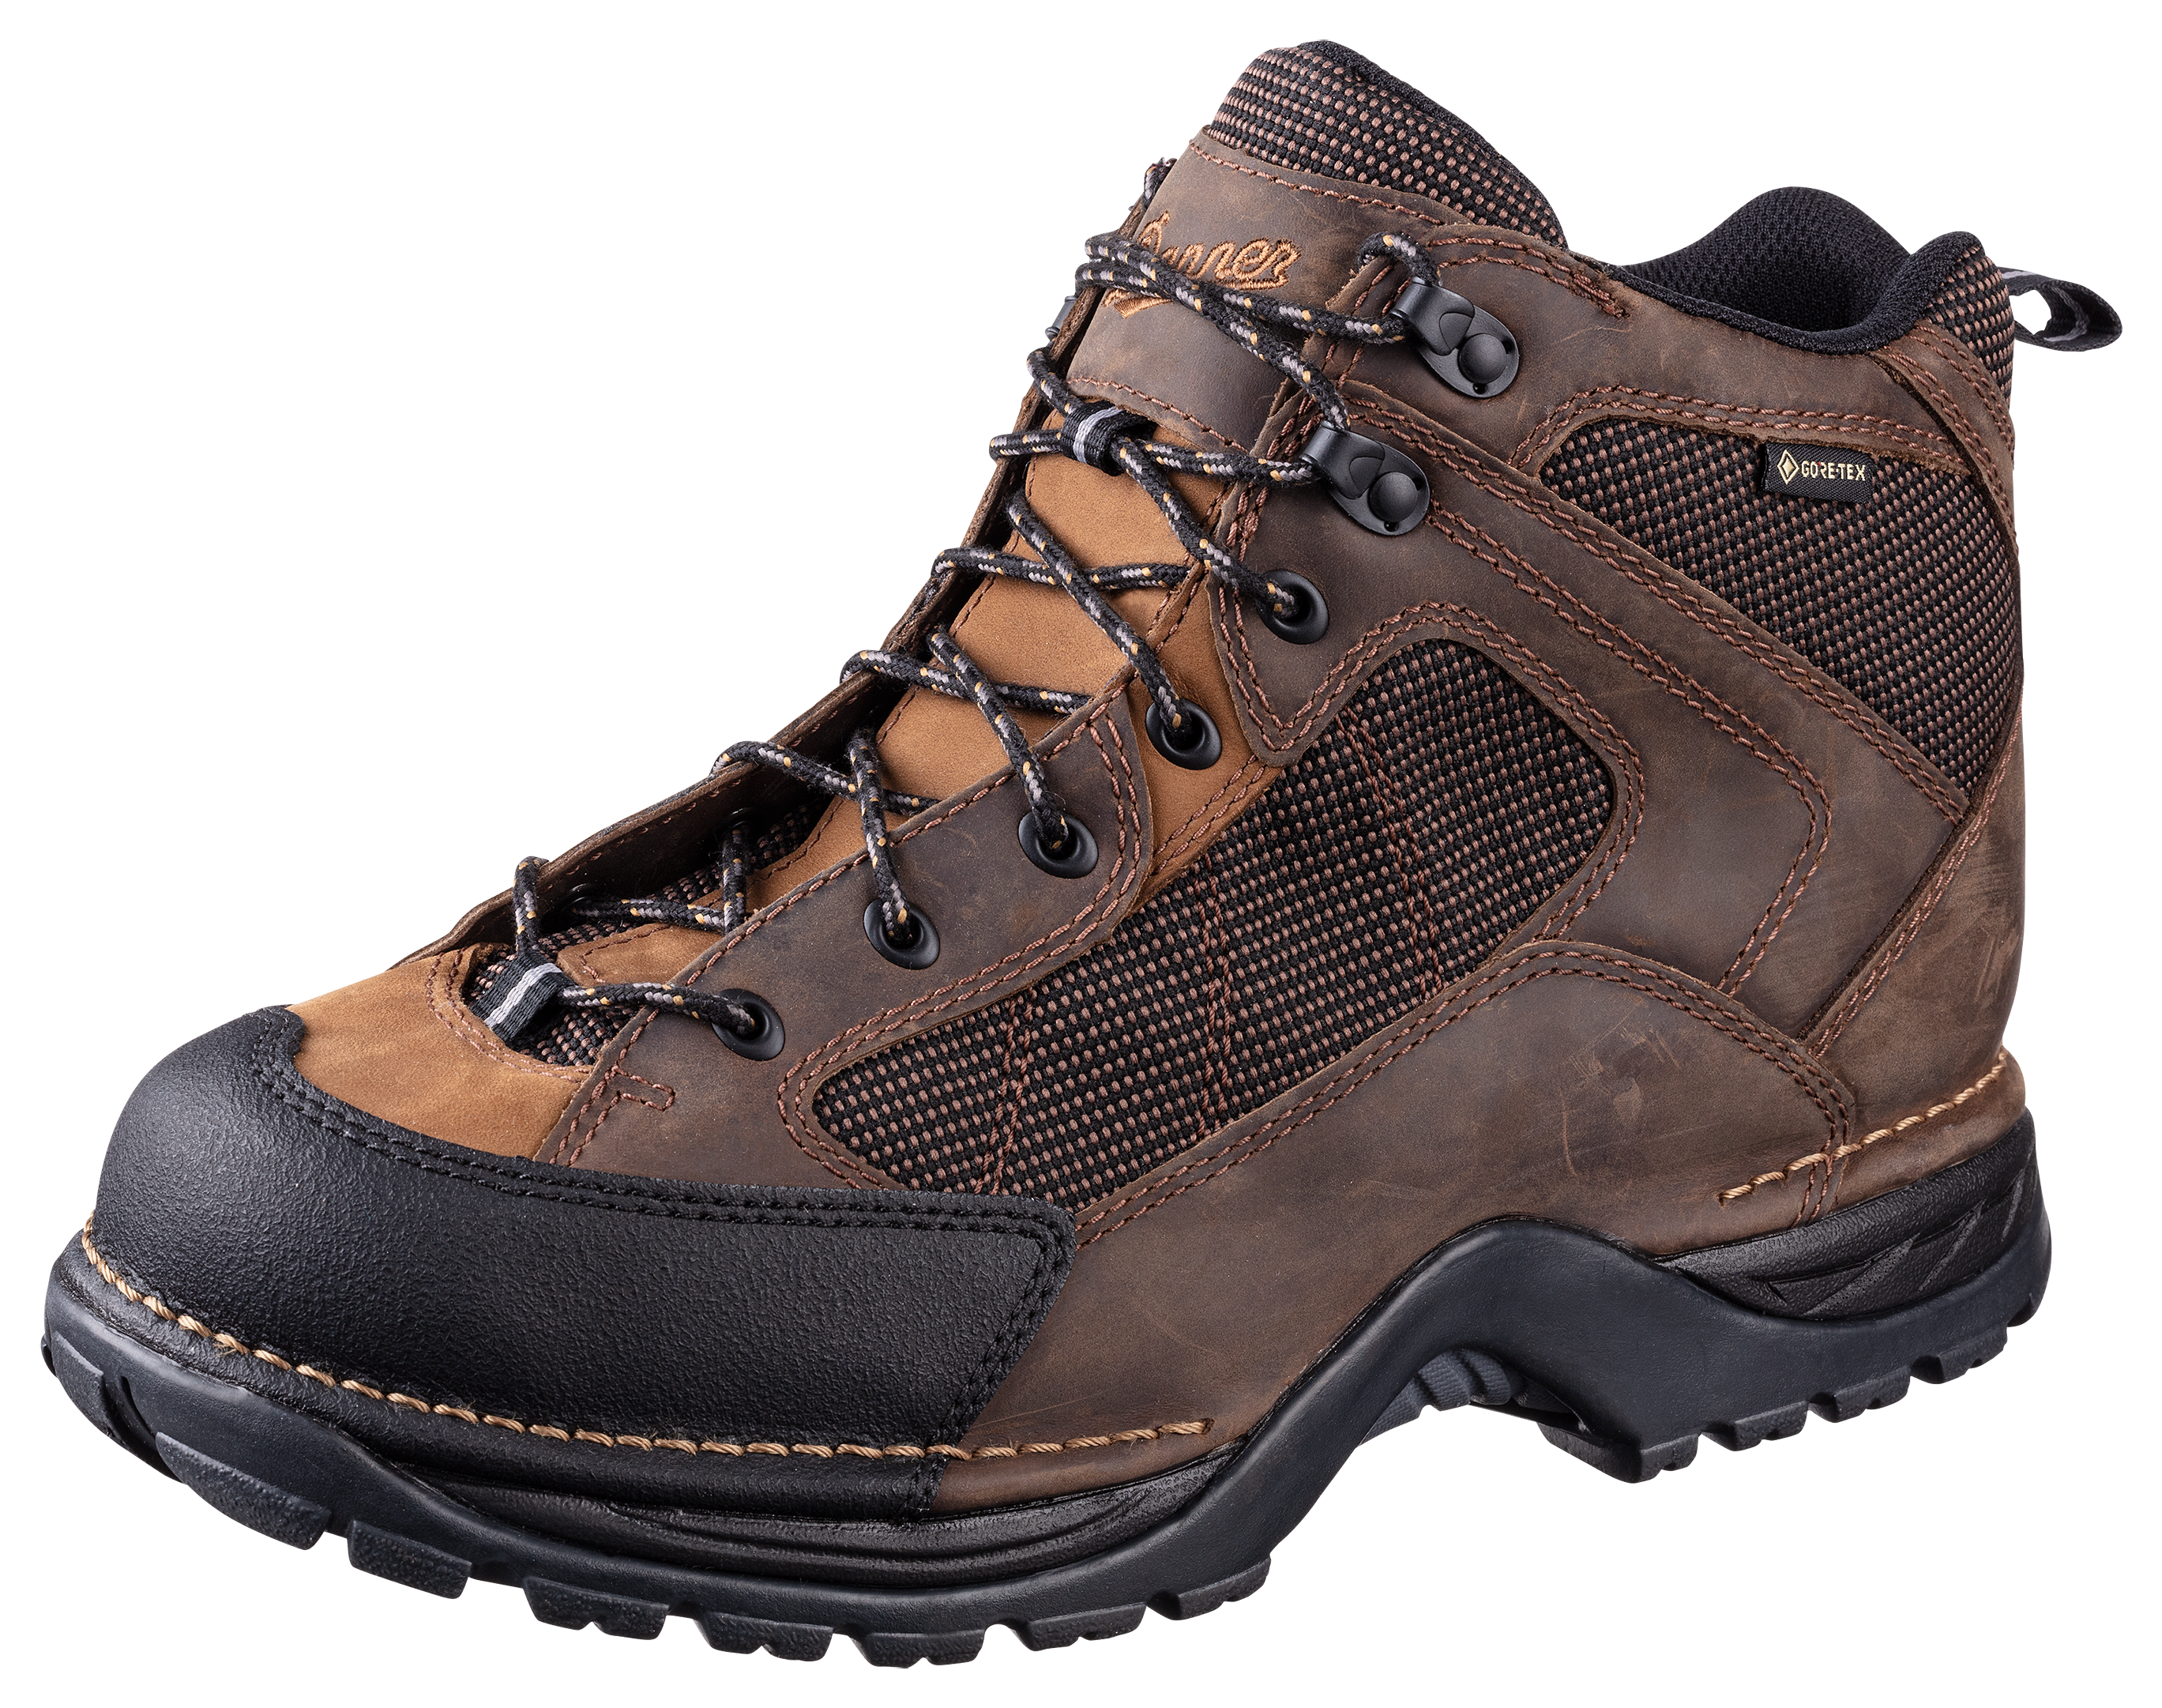 Danner Radical 452 GORE-TEX Hiking Boots for Men - Dark Brown - 12W